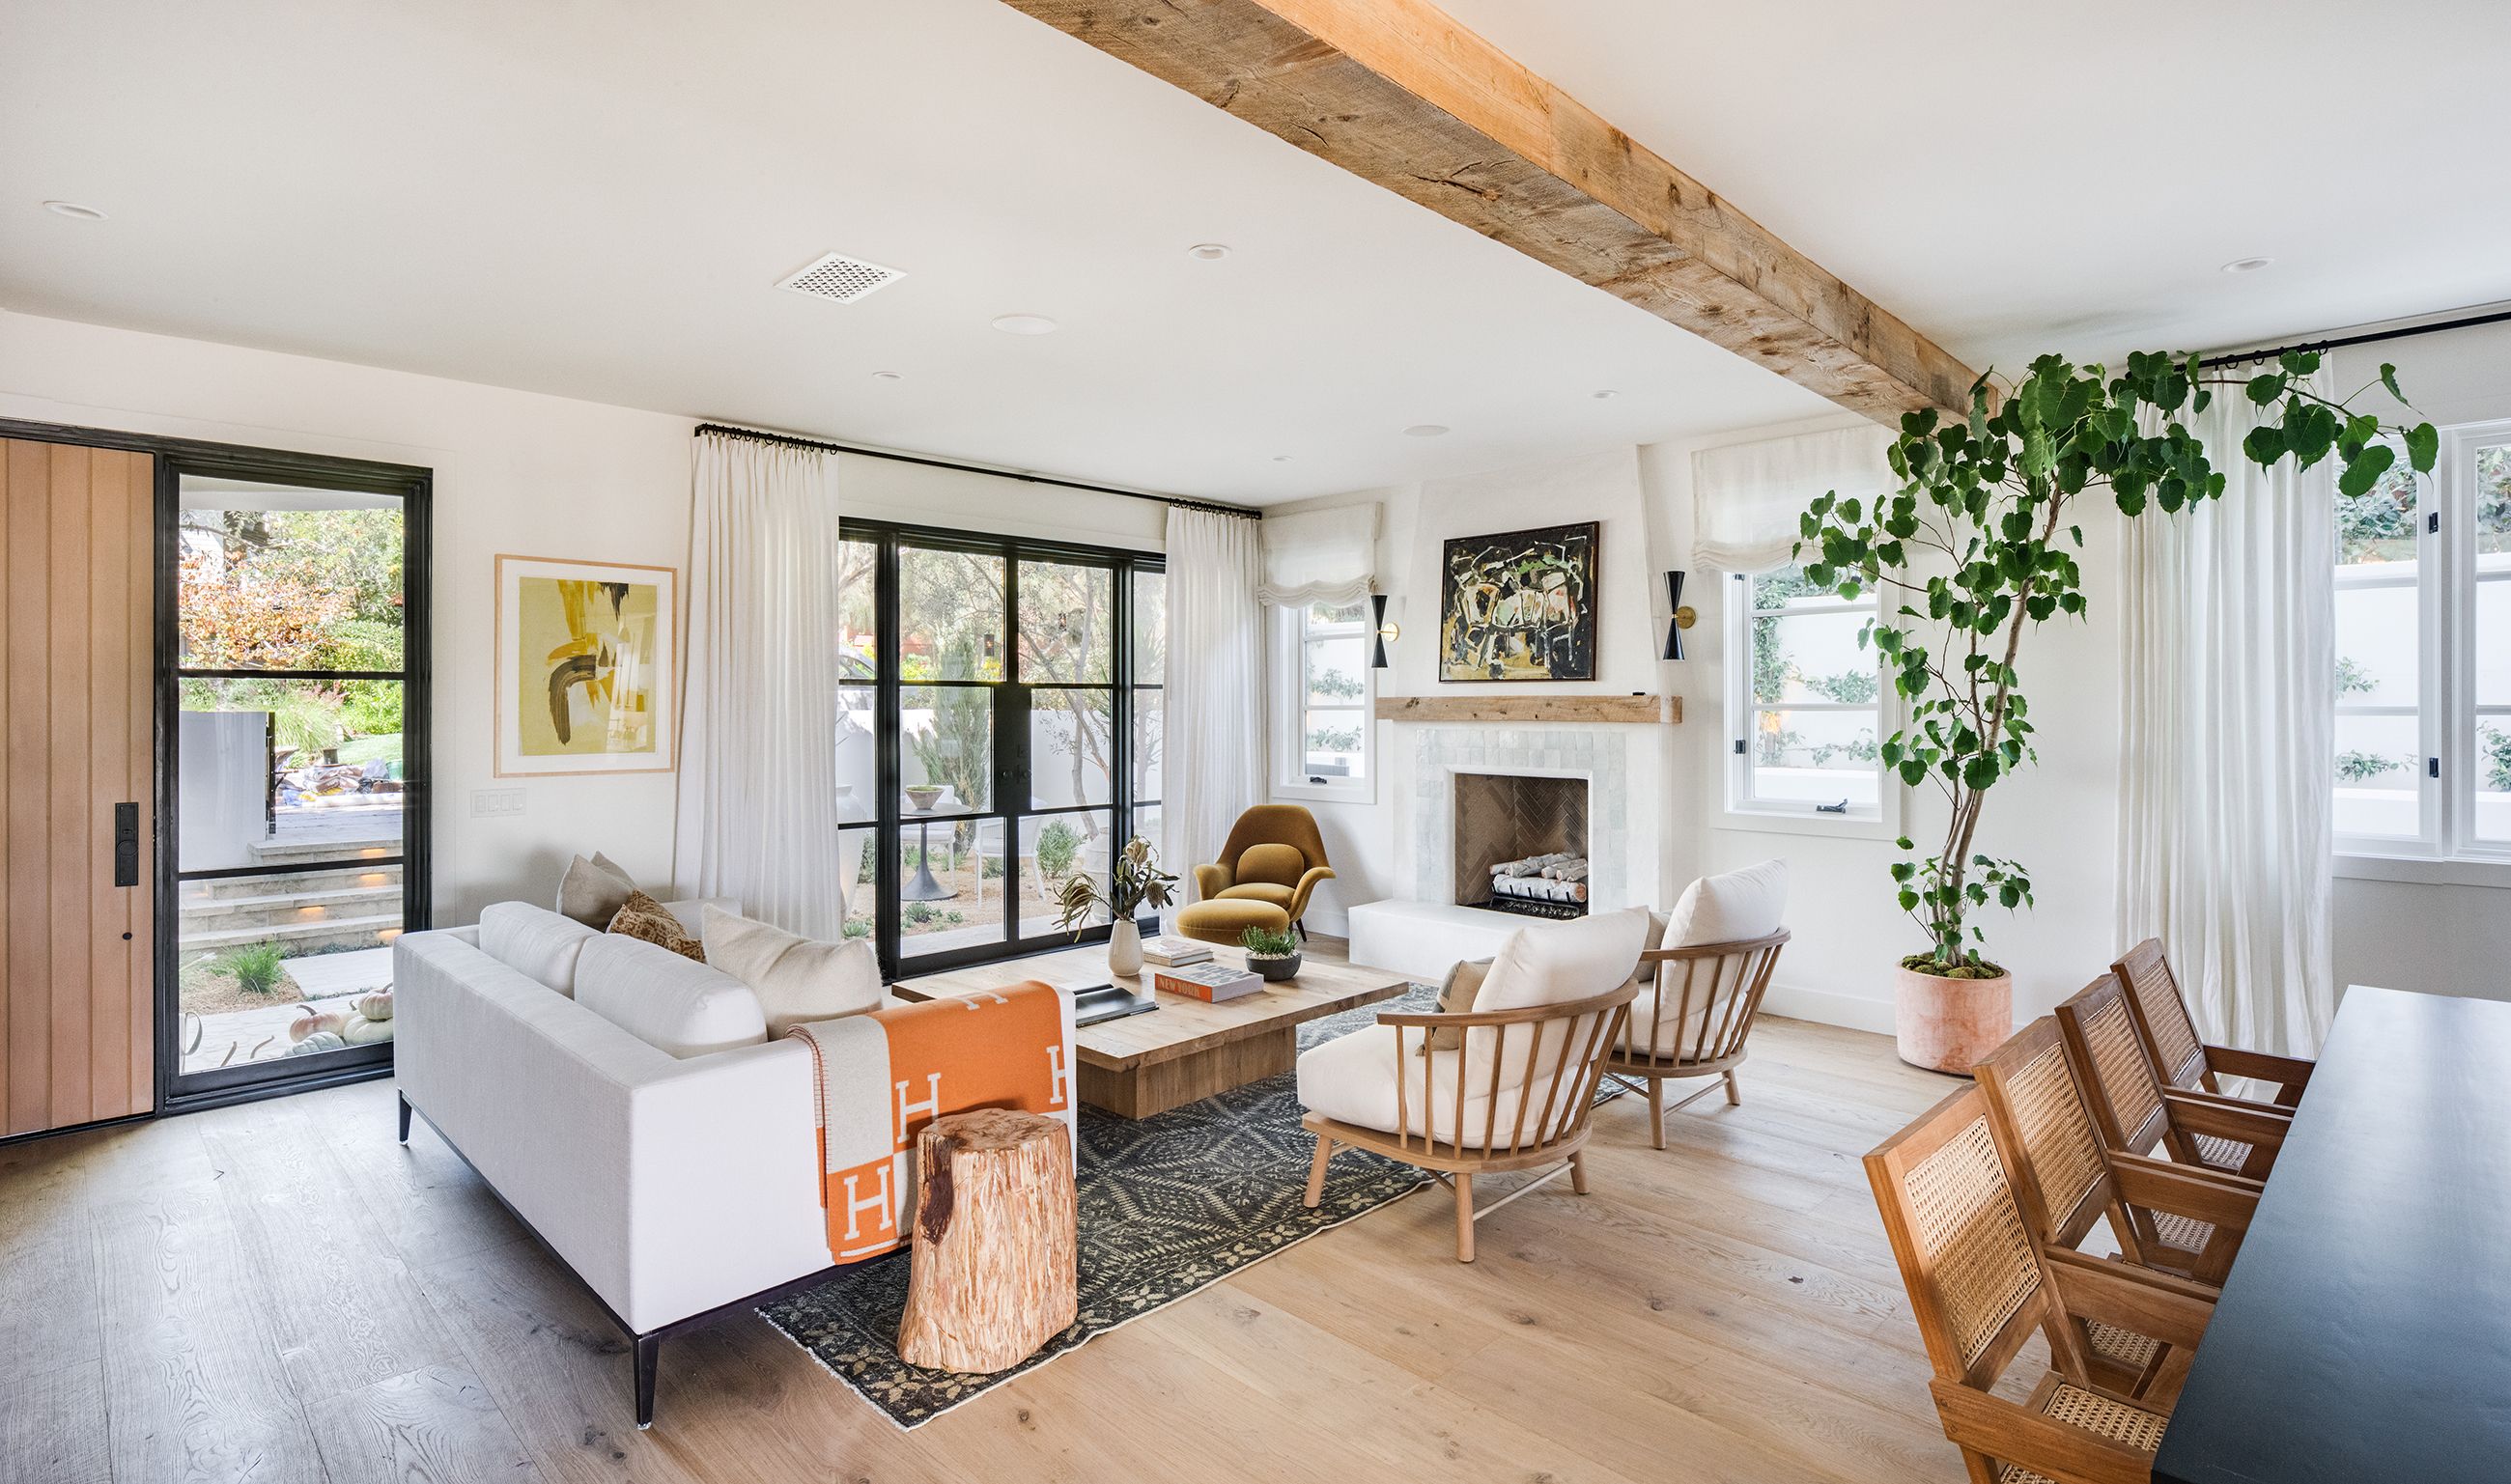 70 Stunning Living Room Ideas Chic, Casual Living Room Ideas